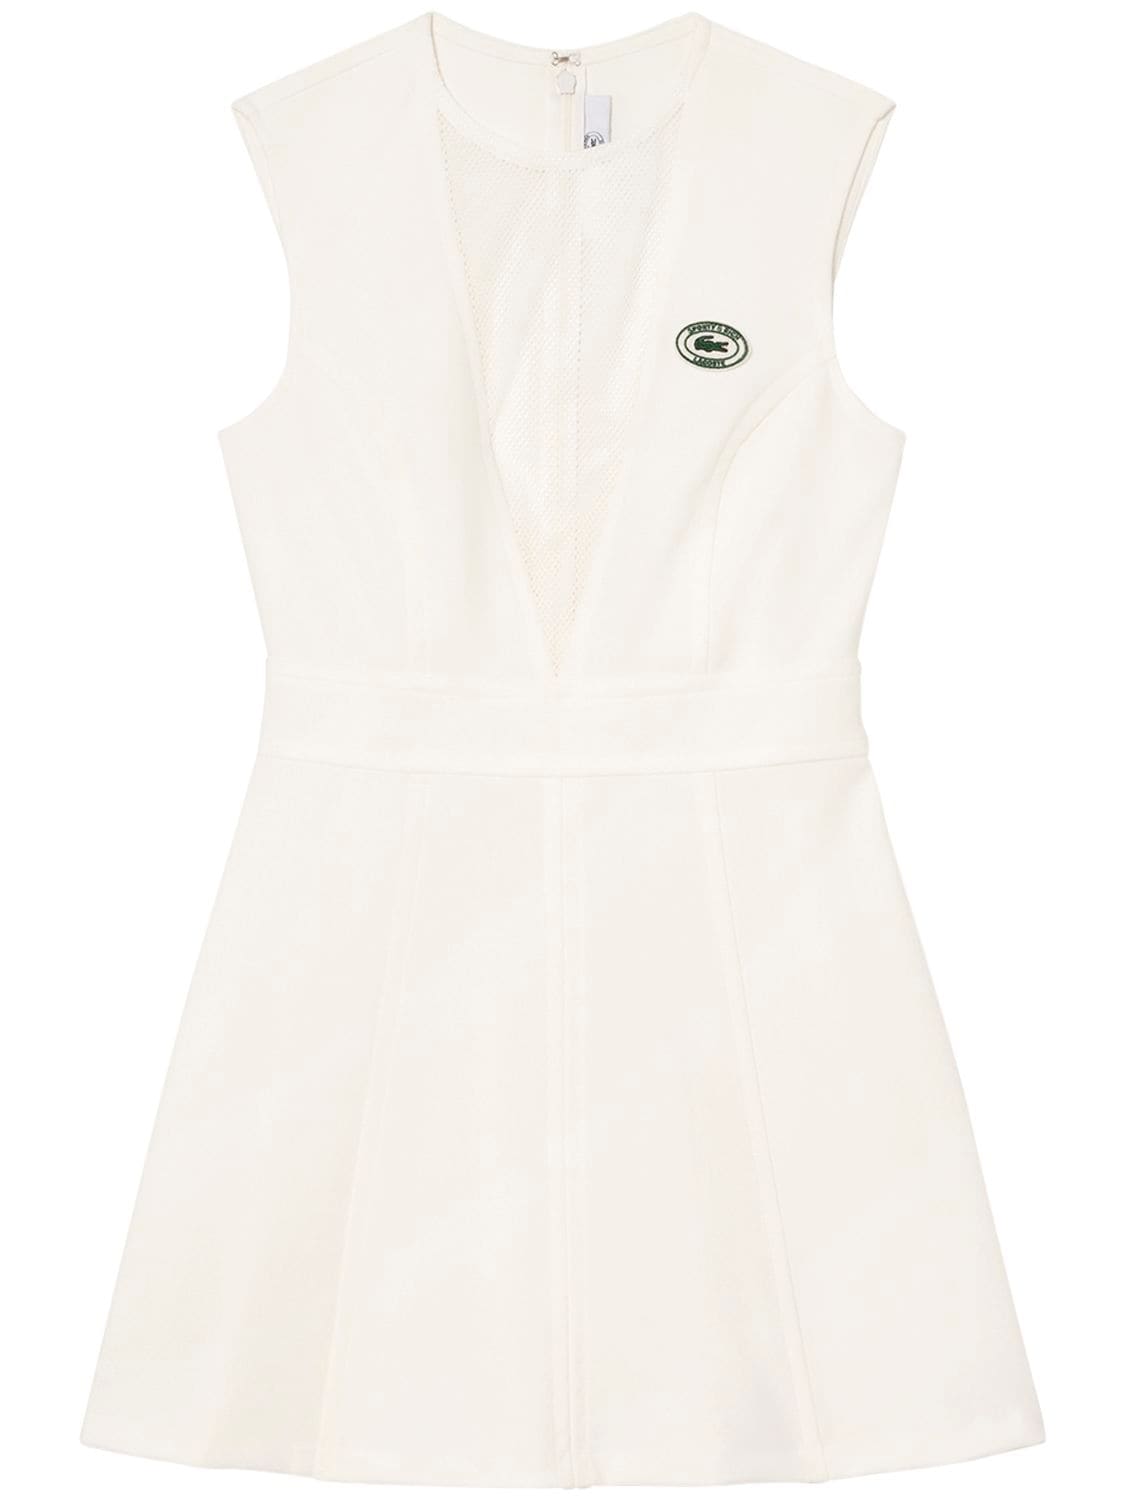 Image of Tennis Dress